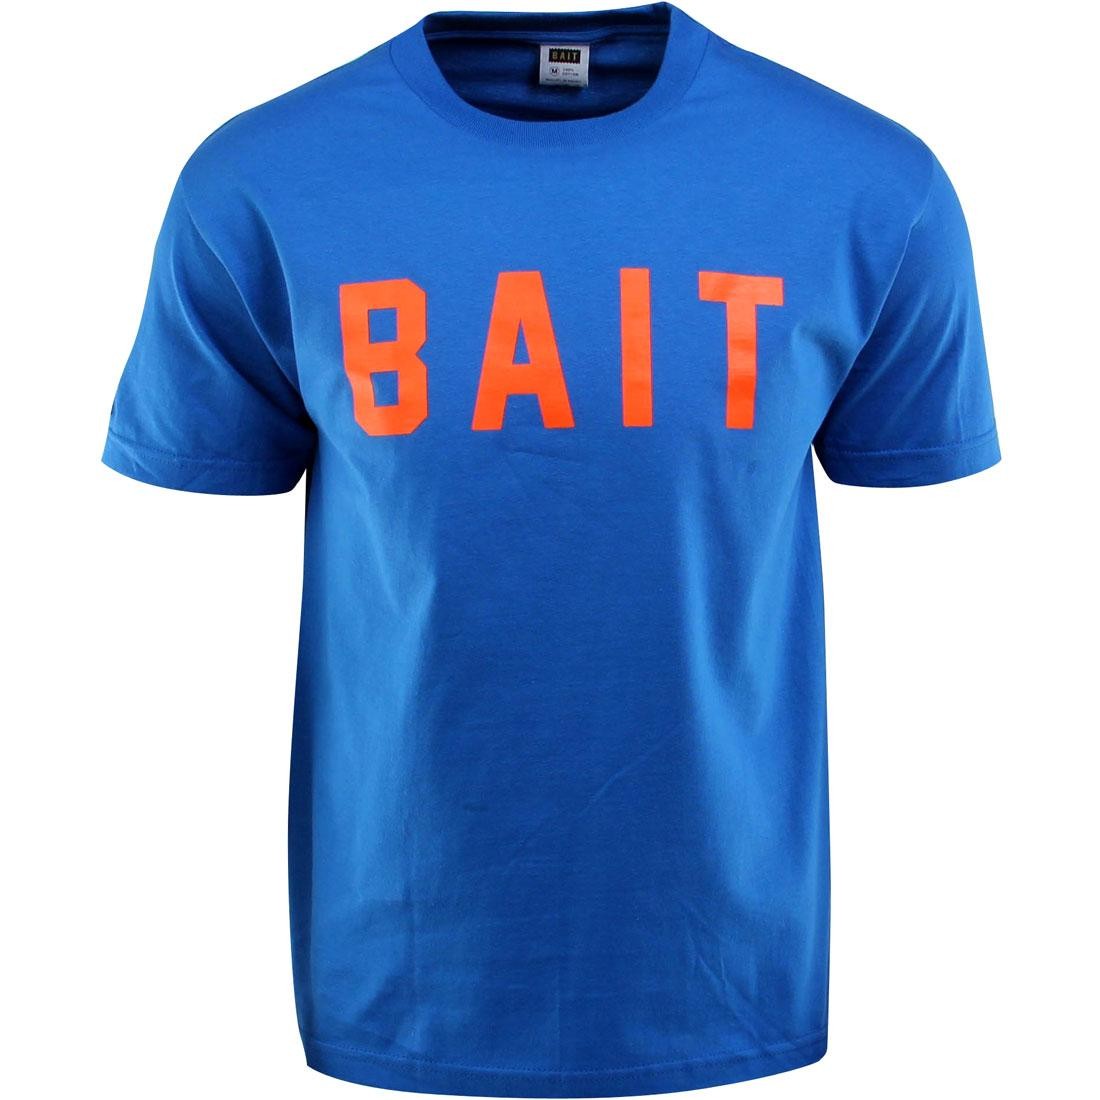 BAIT Logo Tee (blue / royal blue / orange)